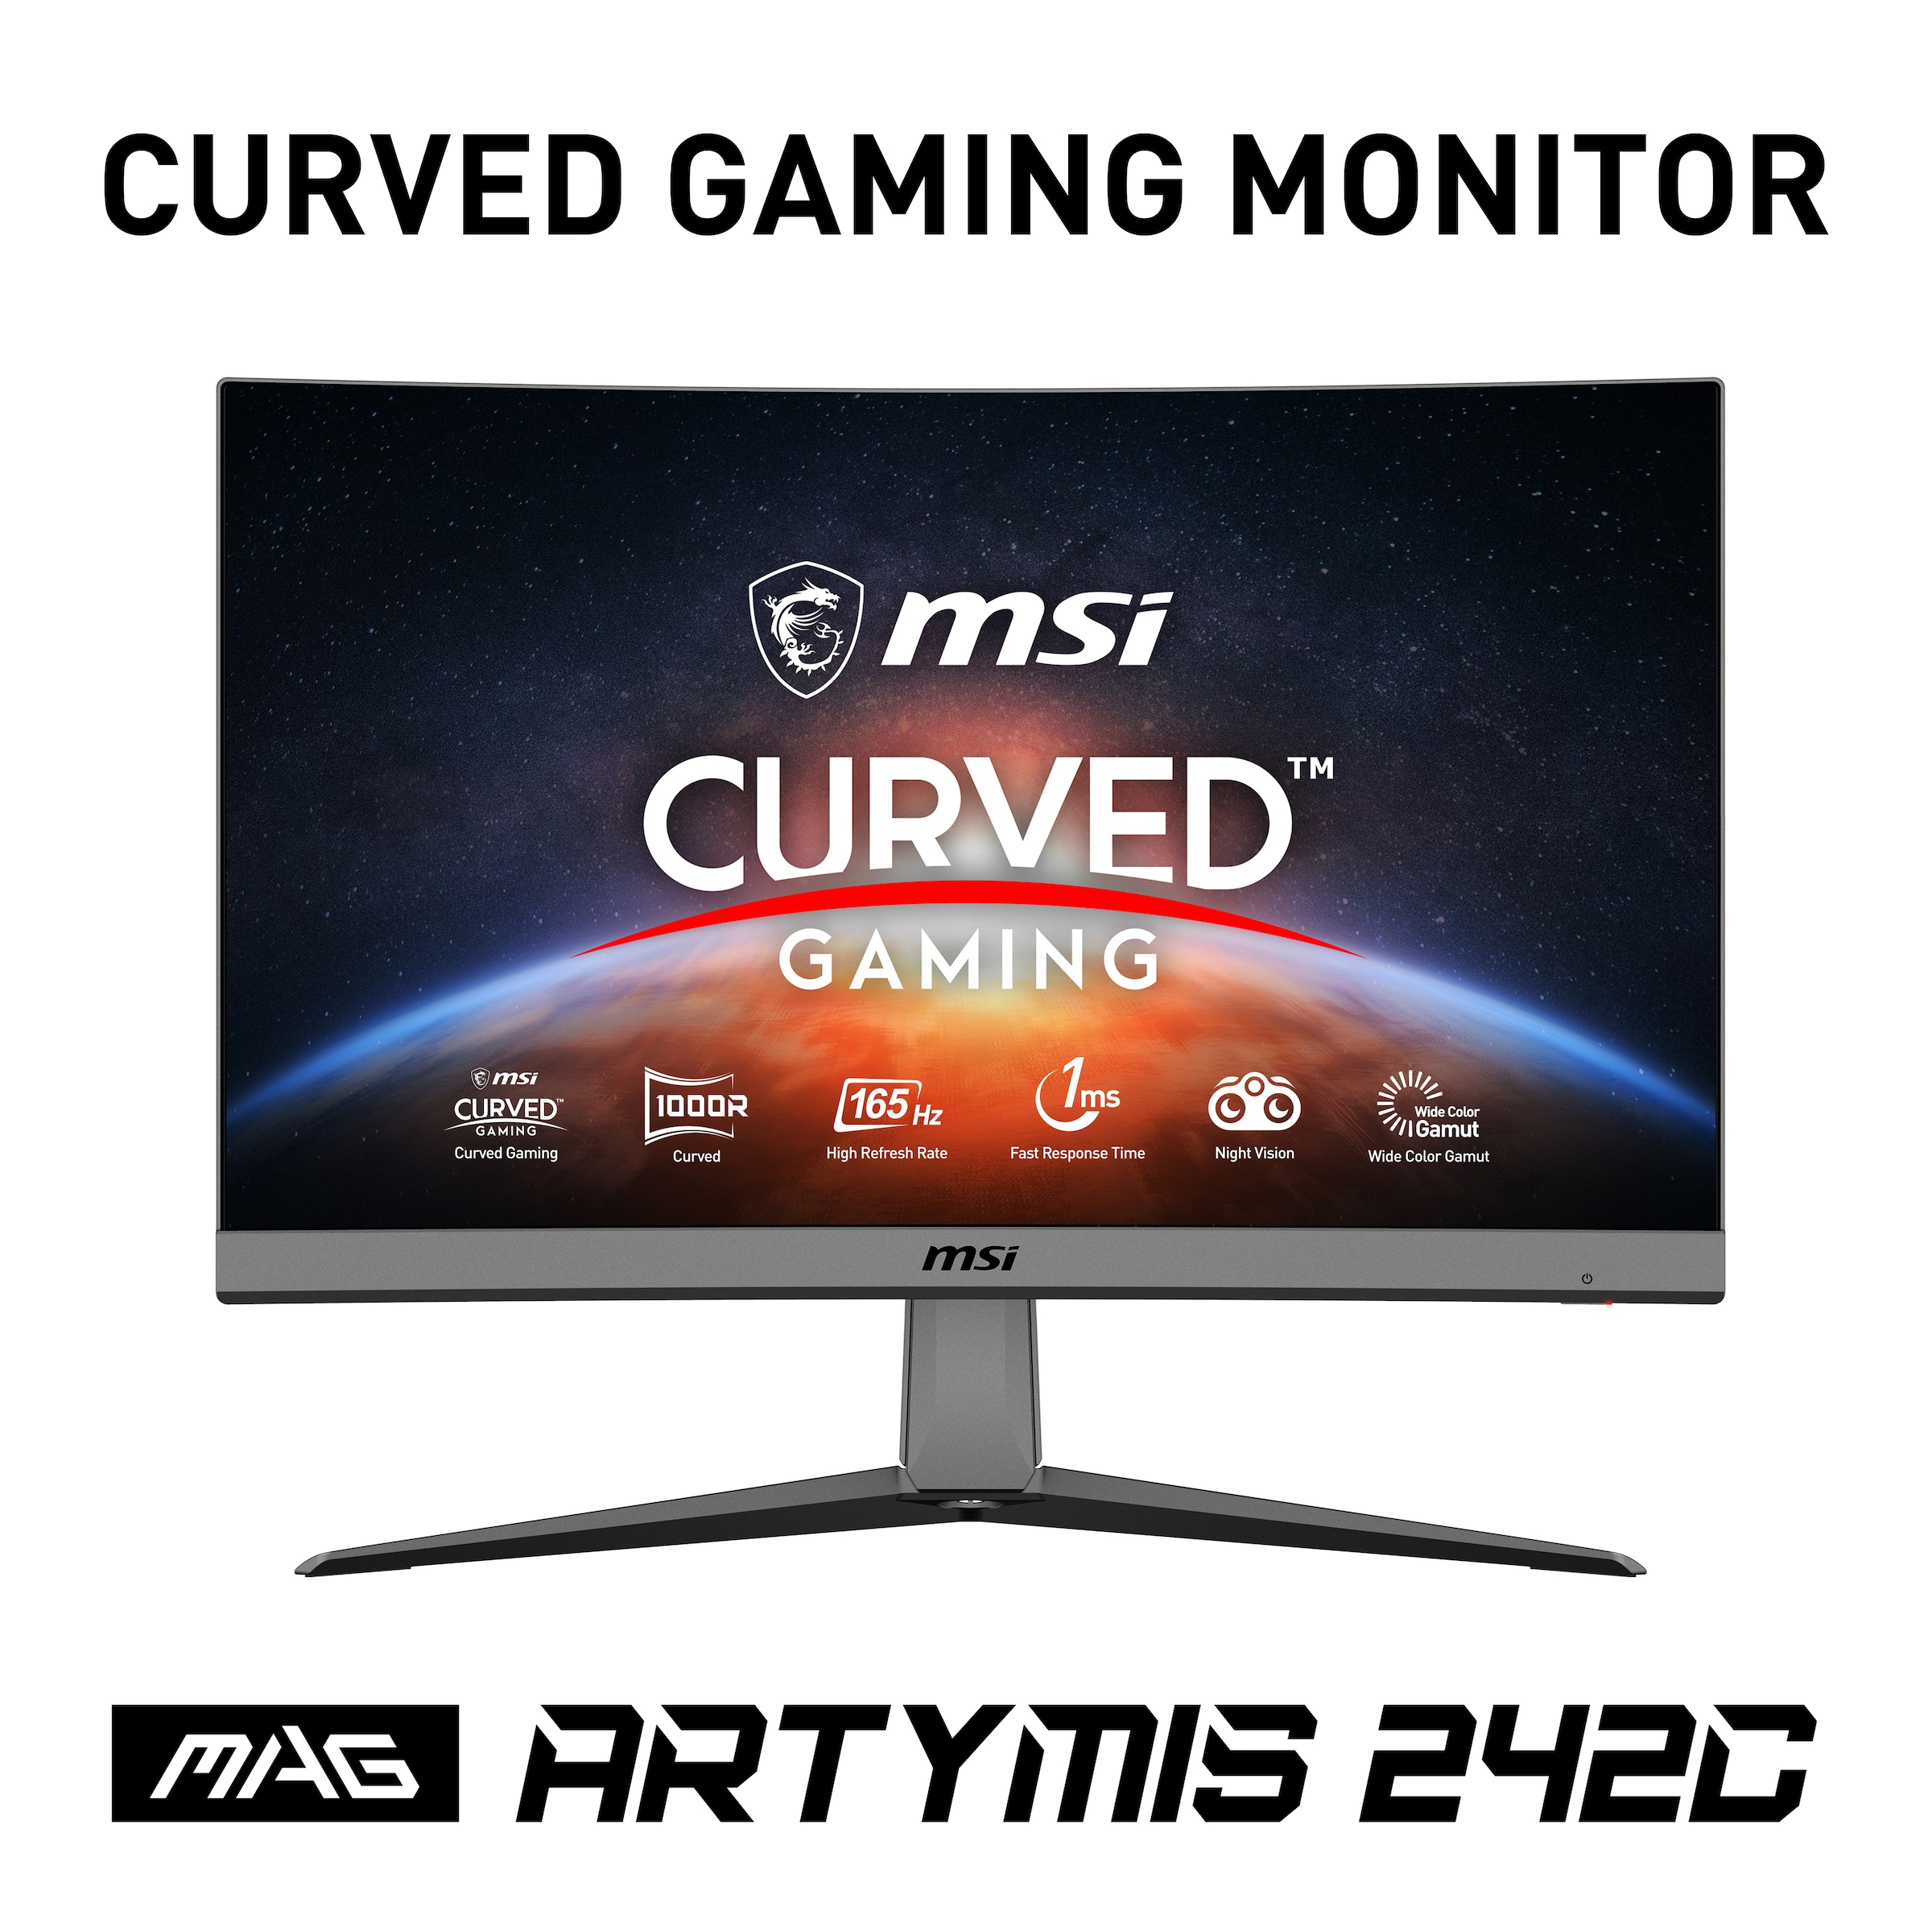 MSI Curved-Gaming-LED-Monitor »MAG ARTYMIS 242C«, 60 cm/23,6 Zoll, 1920 x 1080 px, Retina, 1 ms Reaktionszeit, 165 Hz, rahmenloses Design